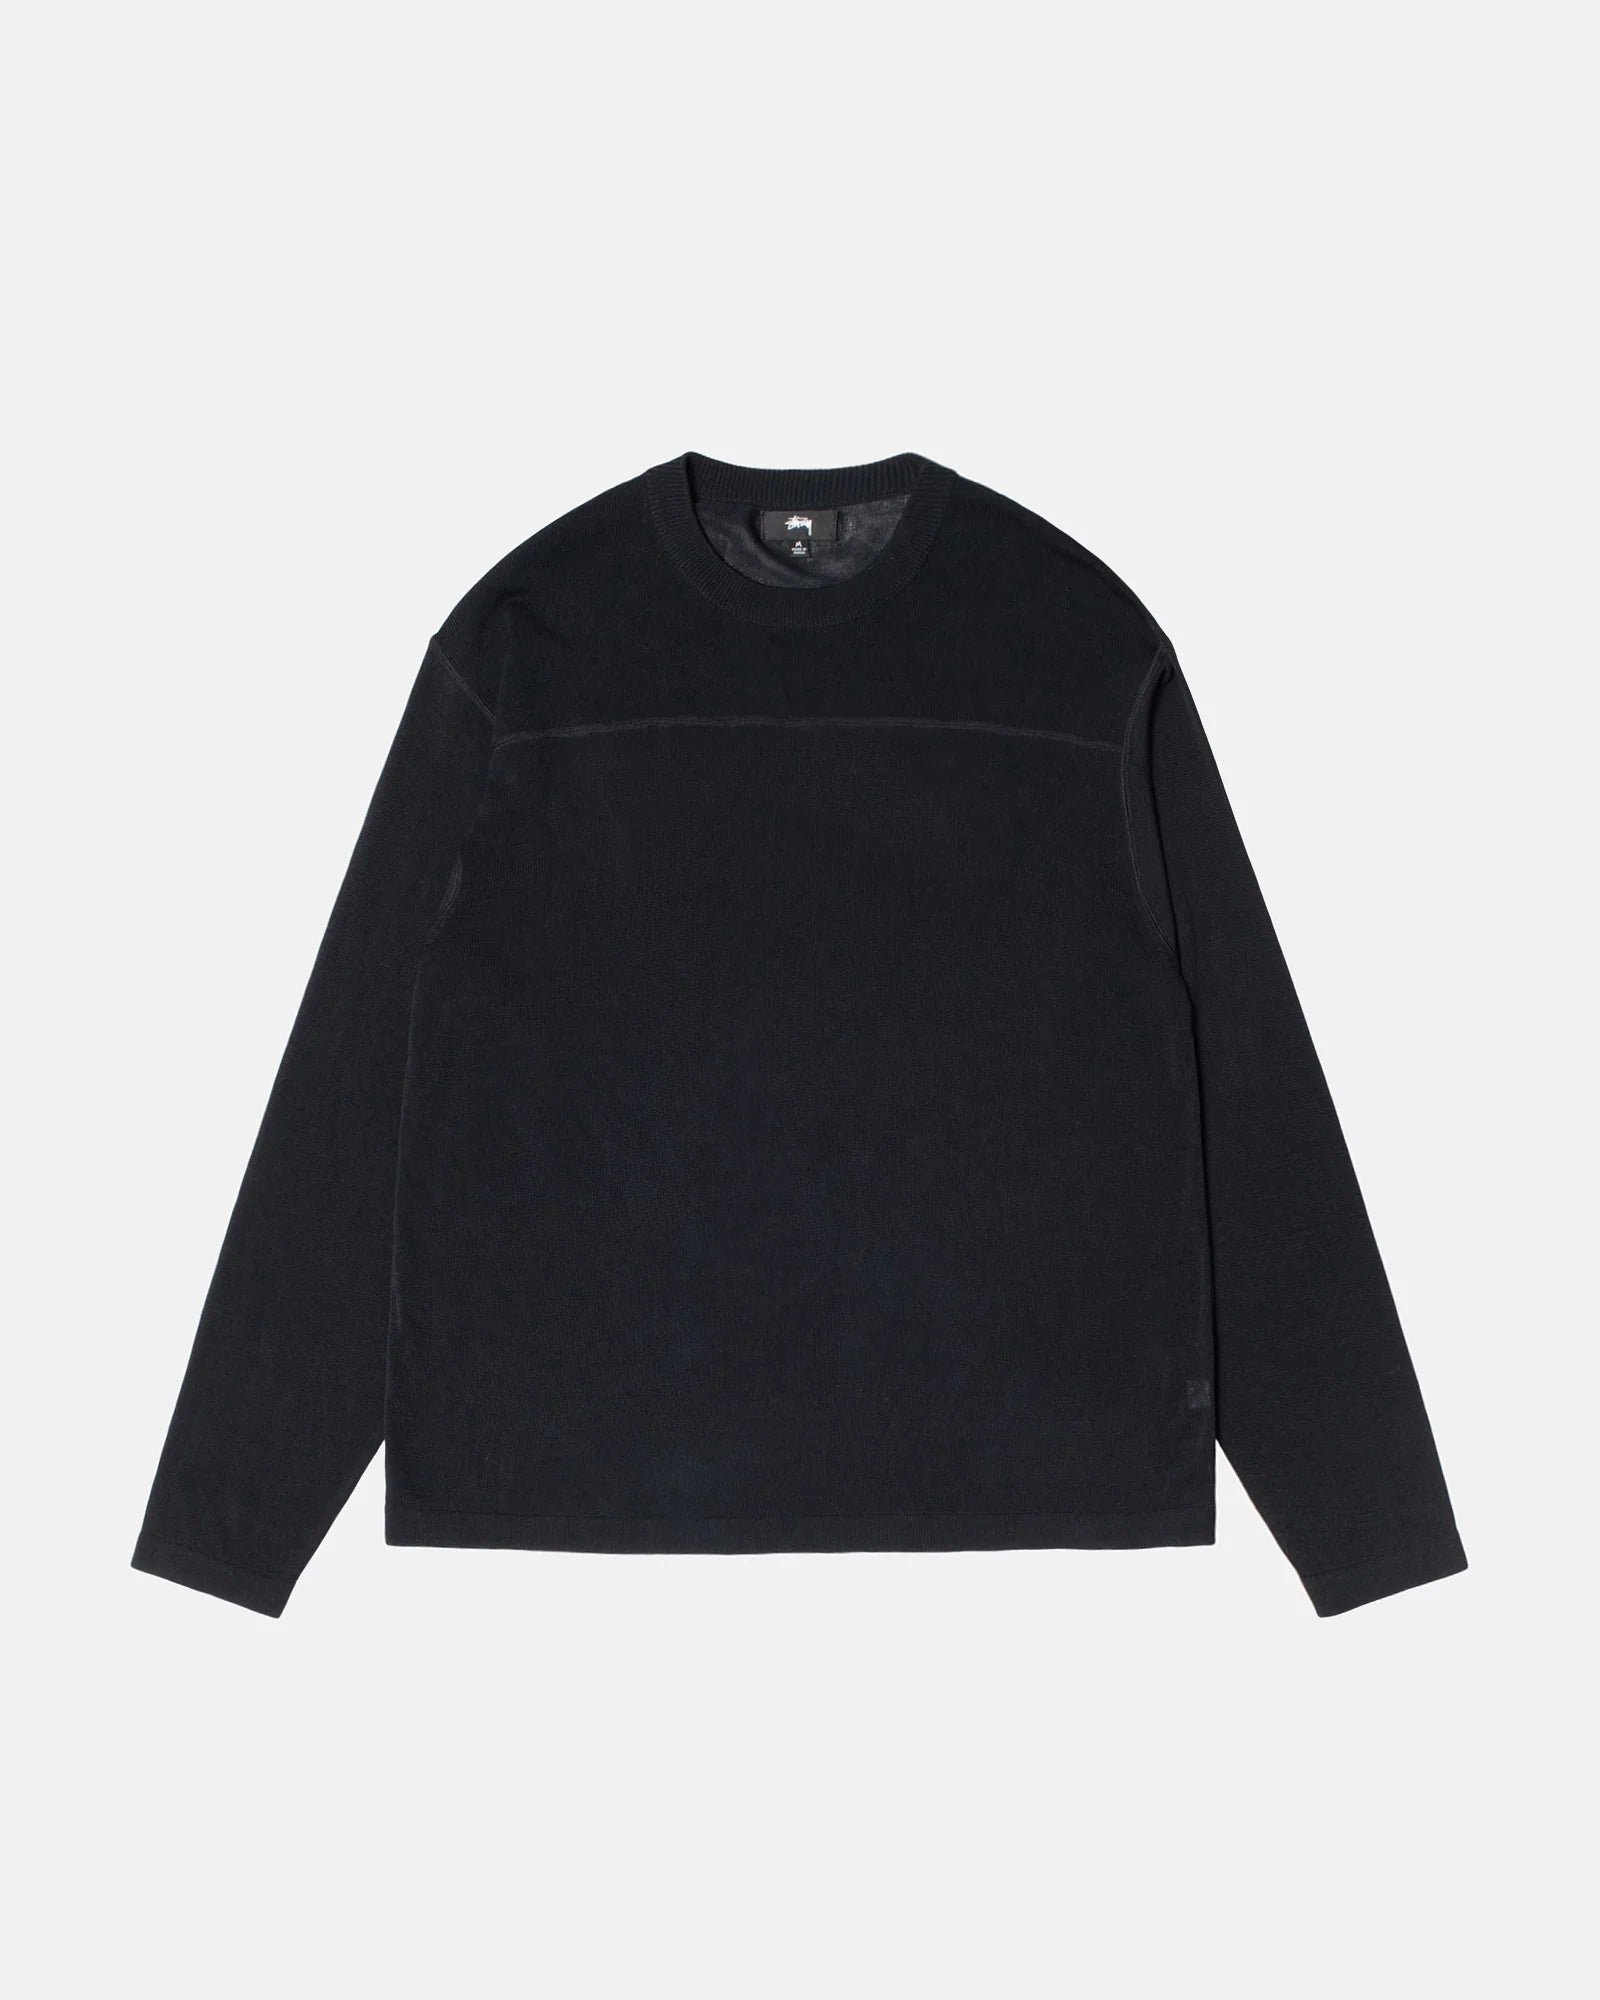 Stussy Football Sweater Black